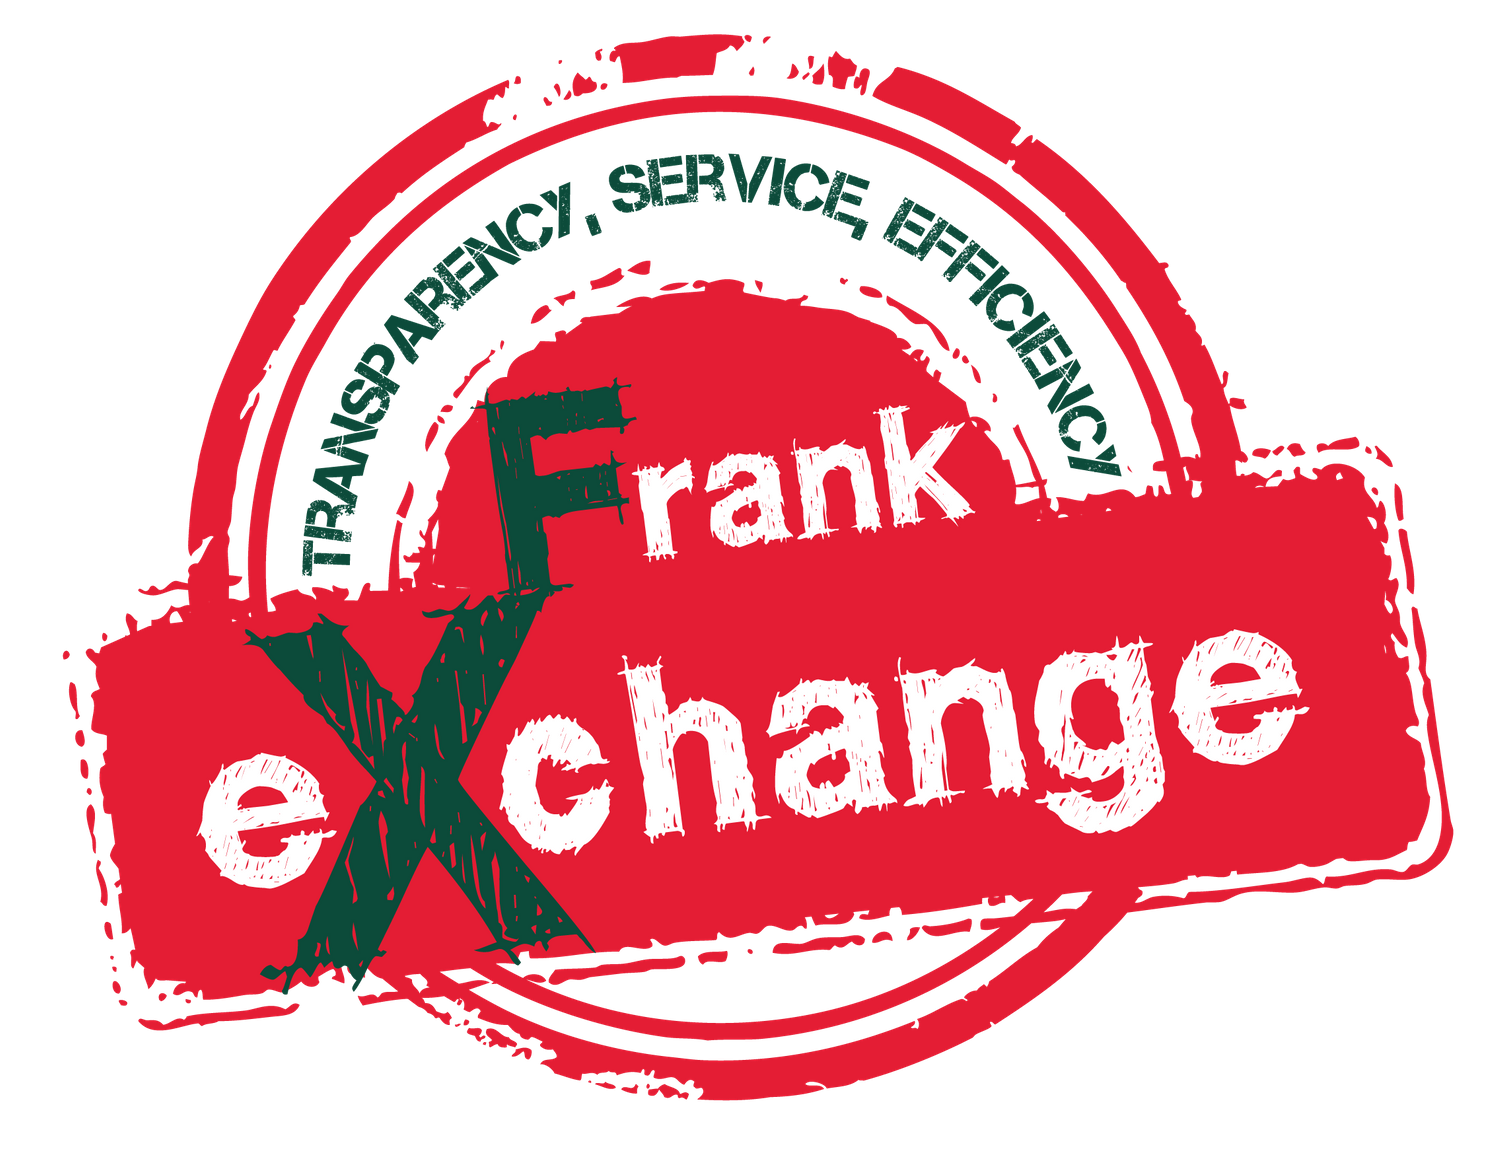 Frank Exchange